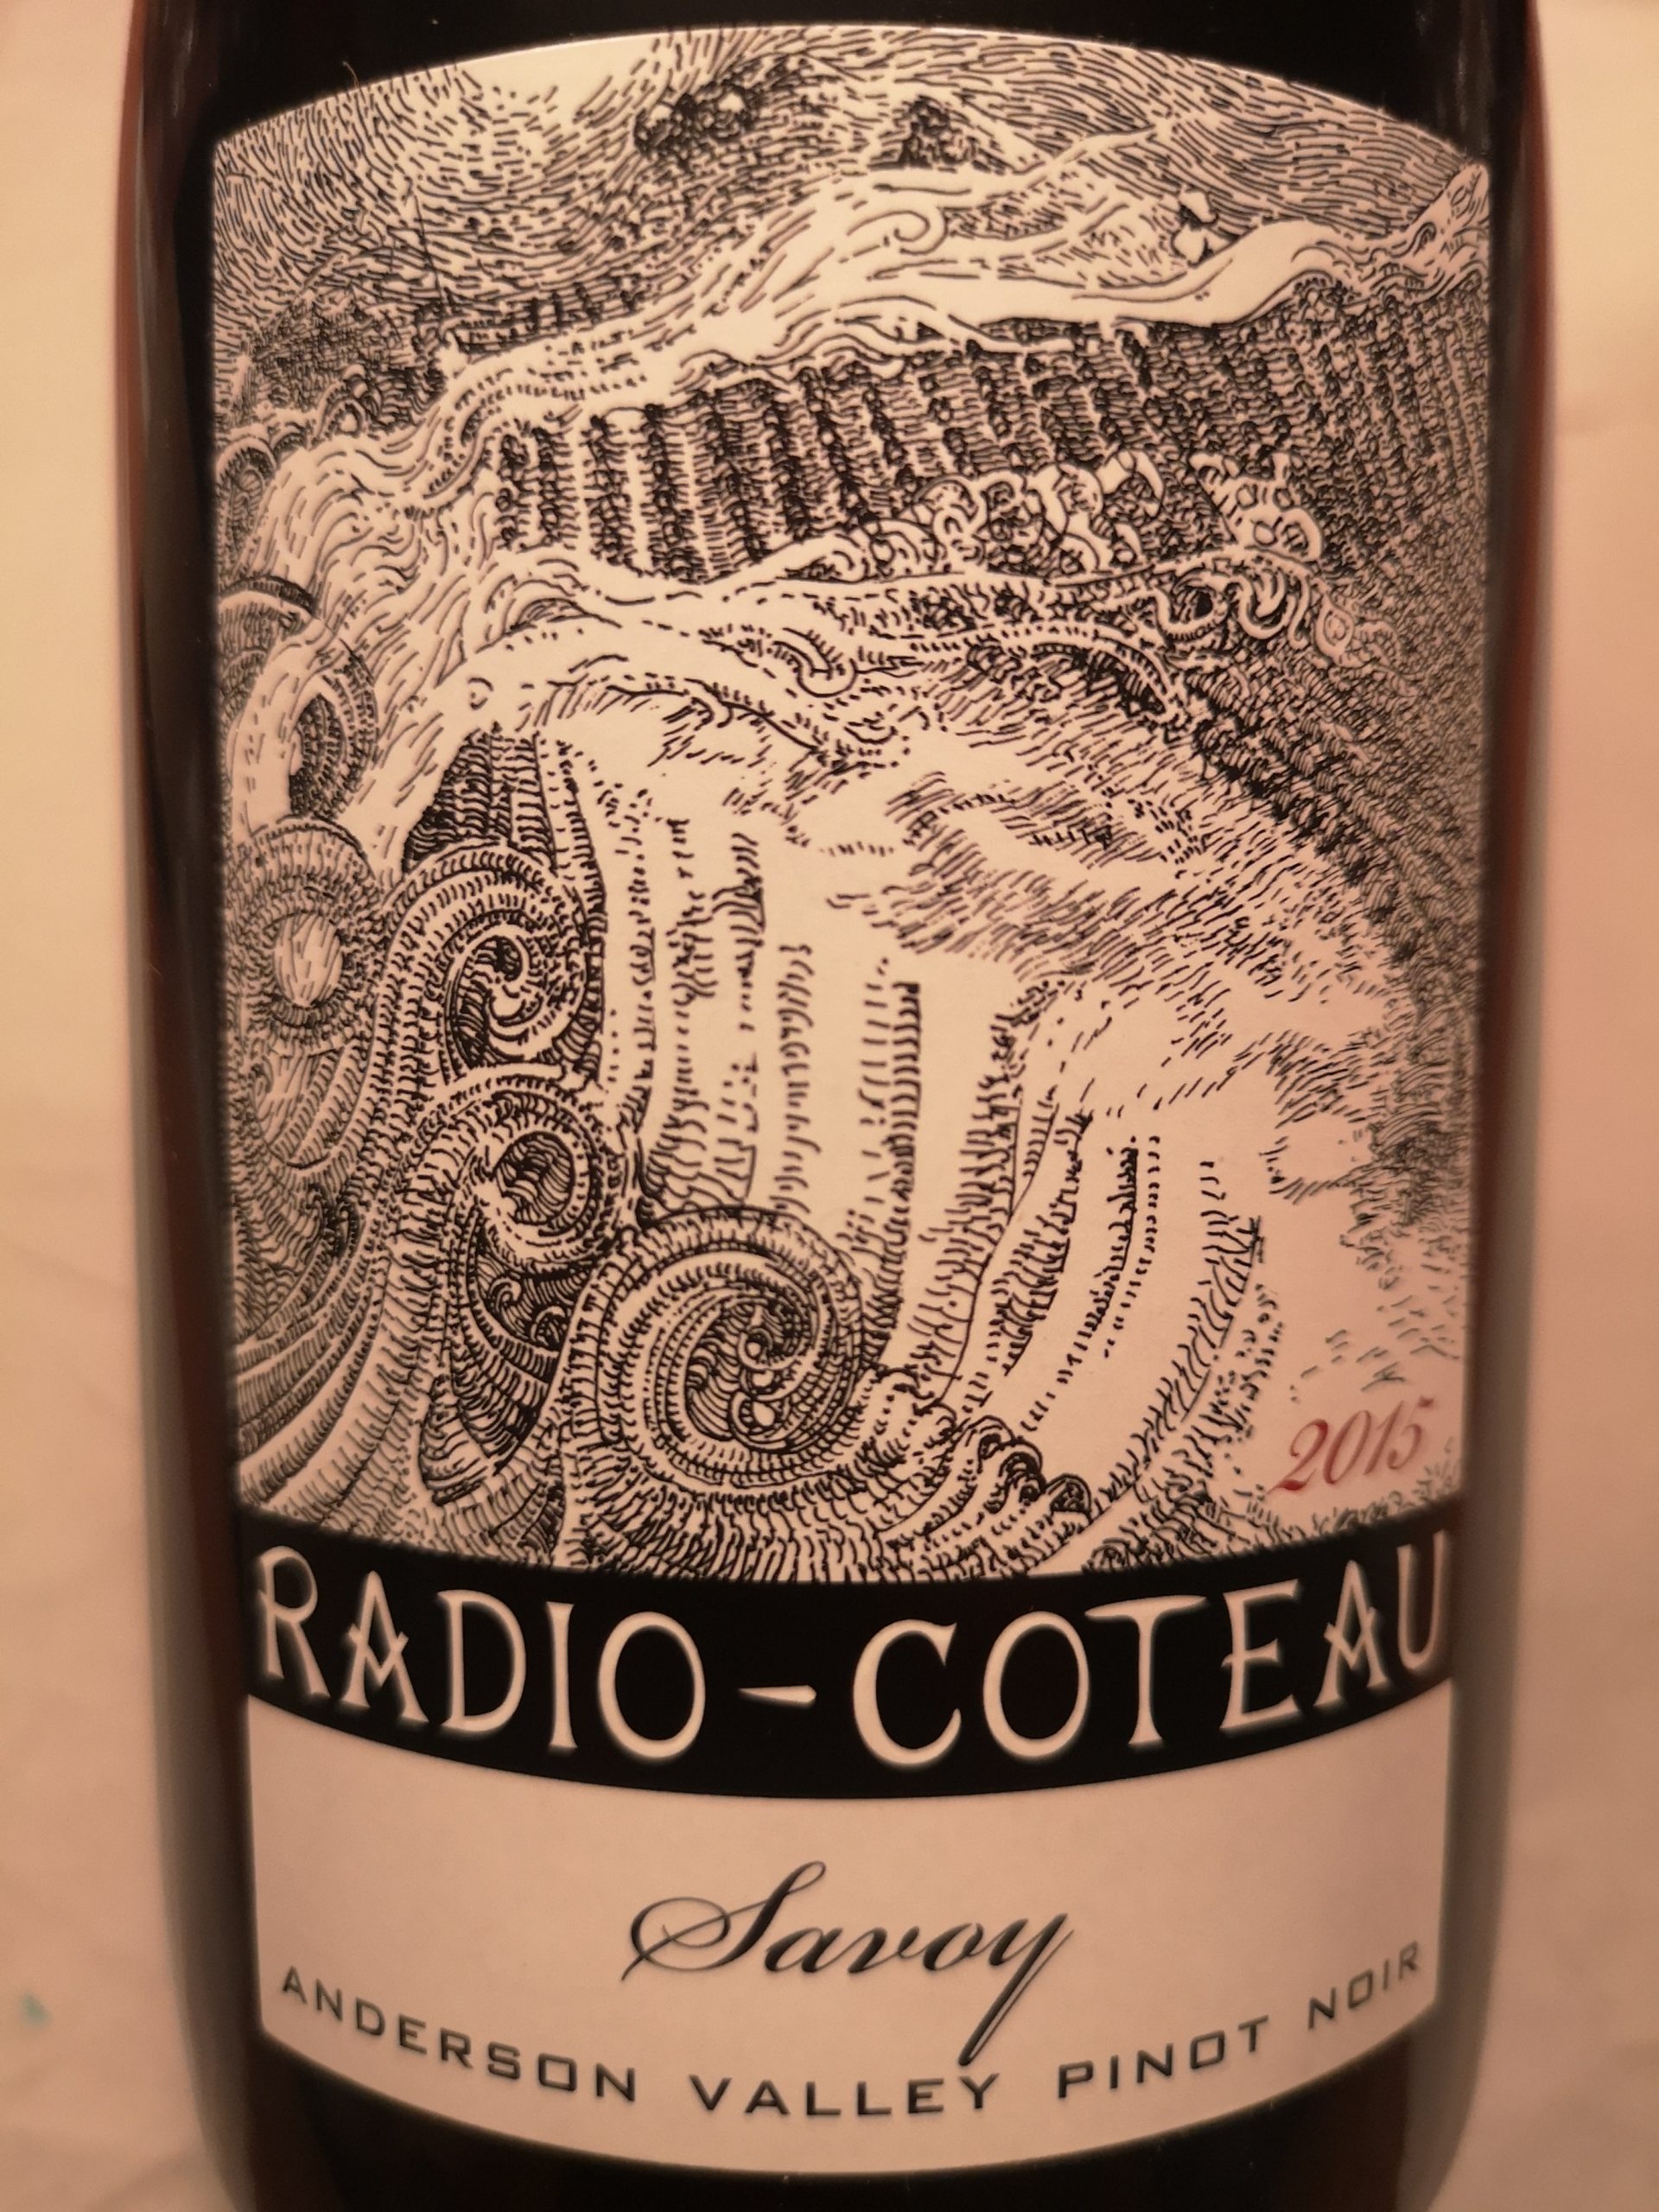 2015 Pinot Noir Savoy Anderson Valley | Radio Coteau